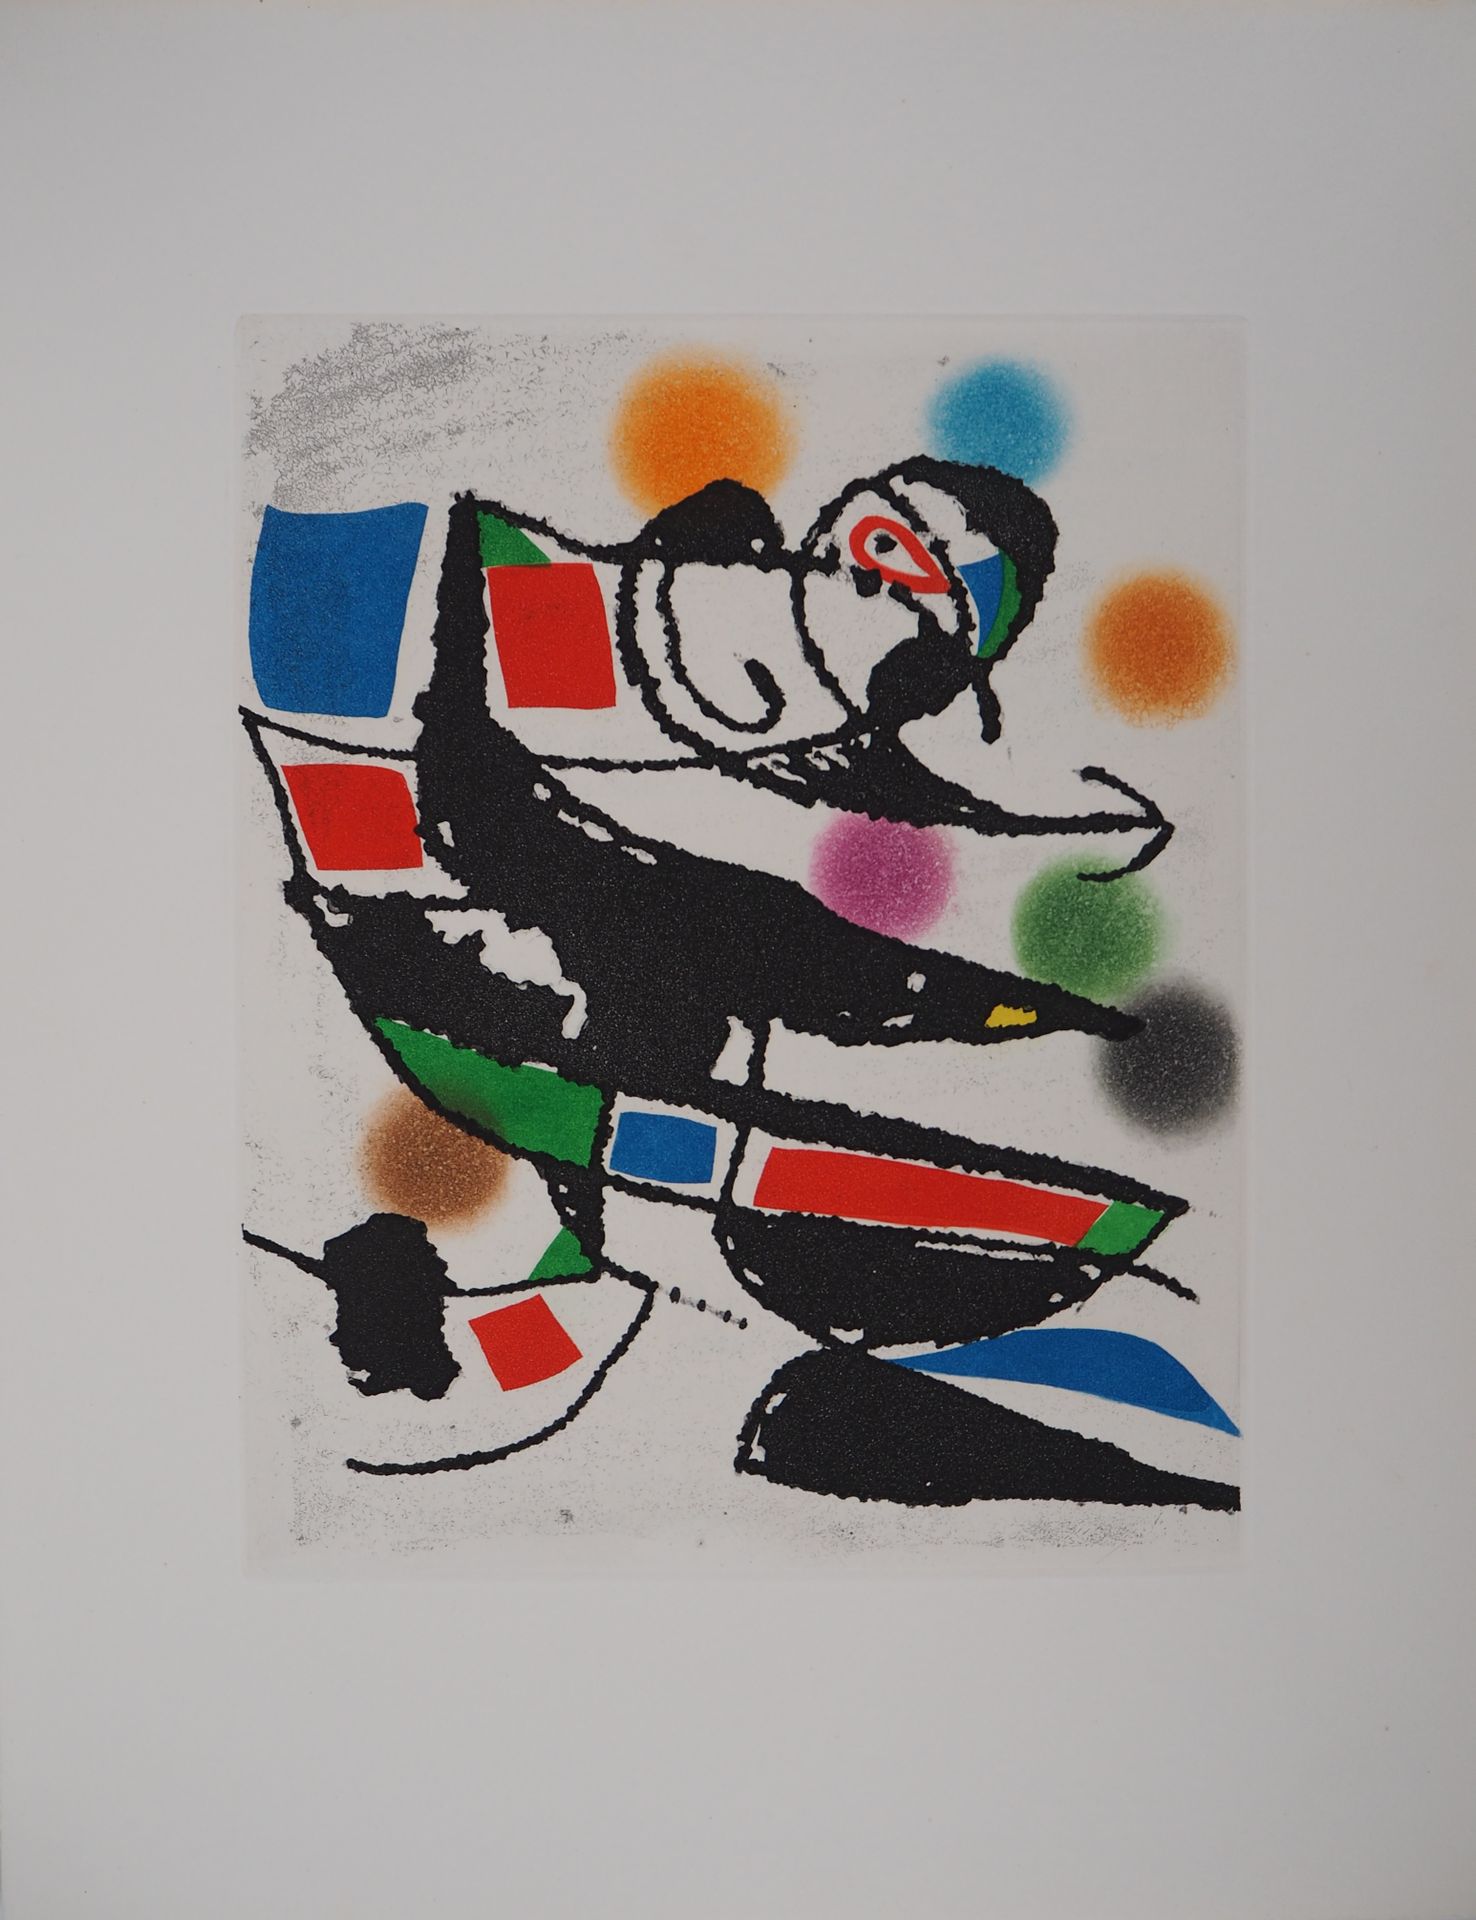 Joan Miro 琼-米罗

Le Marteau sans Maître XIV, 1976年

原始蚀刻版画和水印

在Arches牛皮纸上

尺寸：50&hellip;